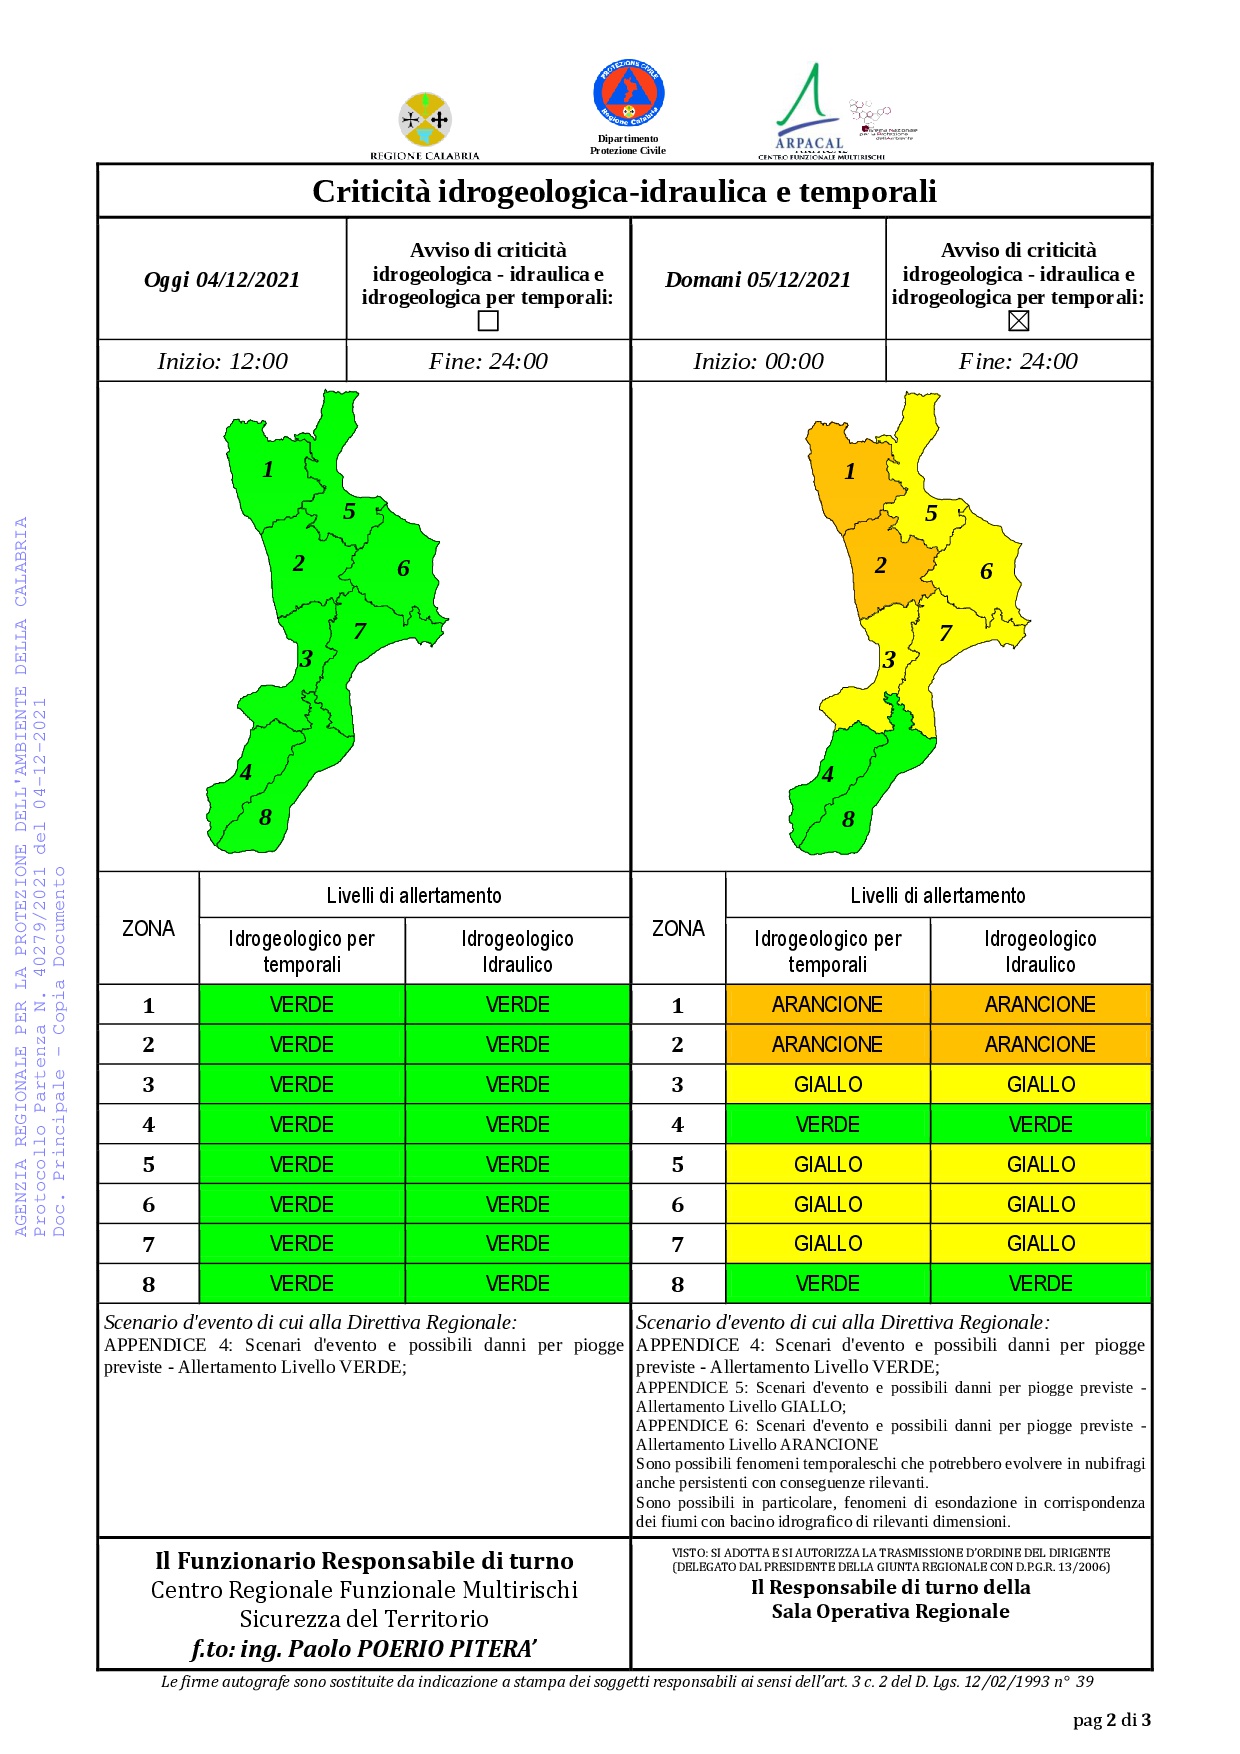 Criticità idrogeologica-idraulica e temporali in Calabria 04-12-2021